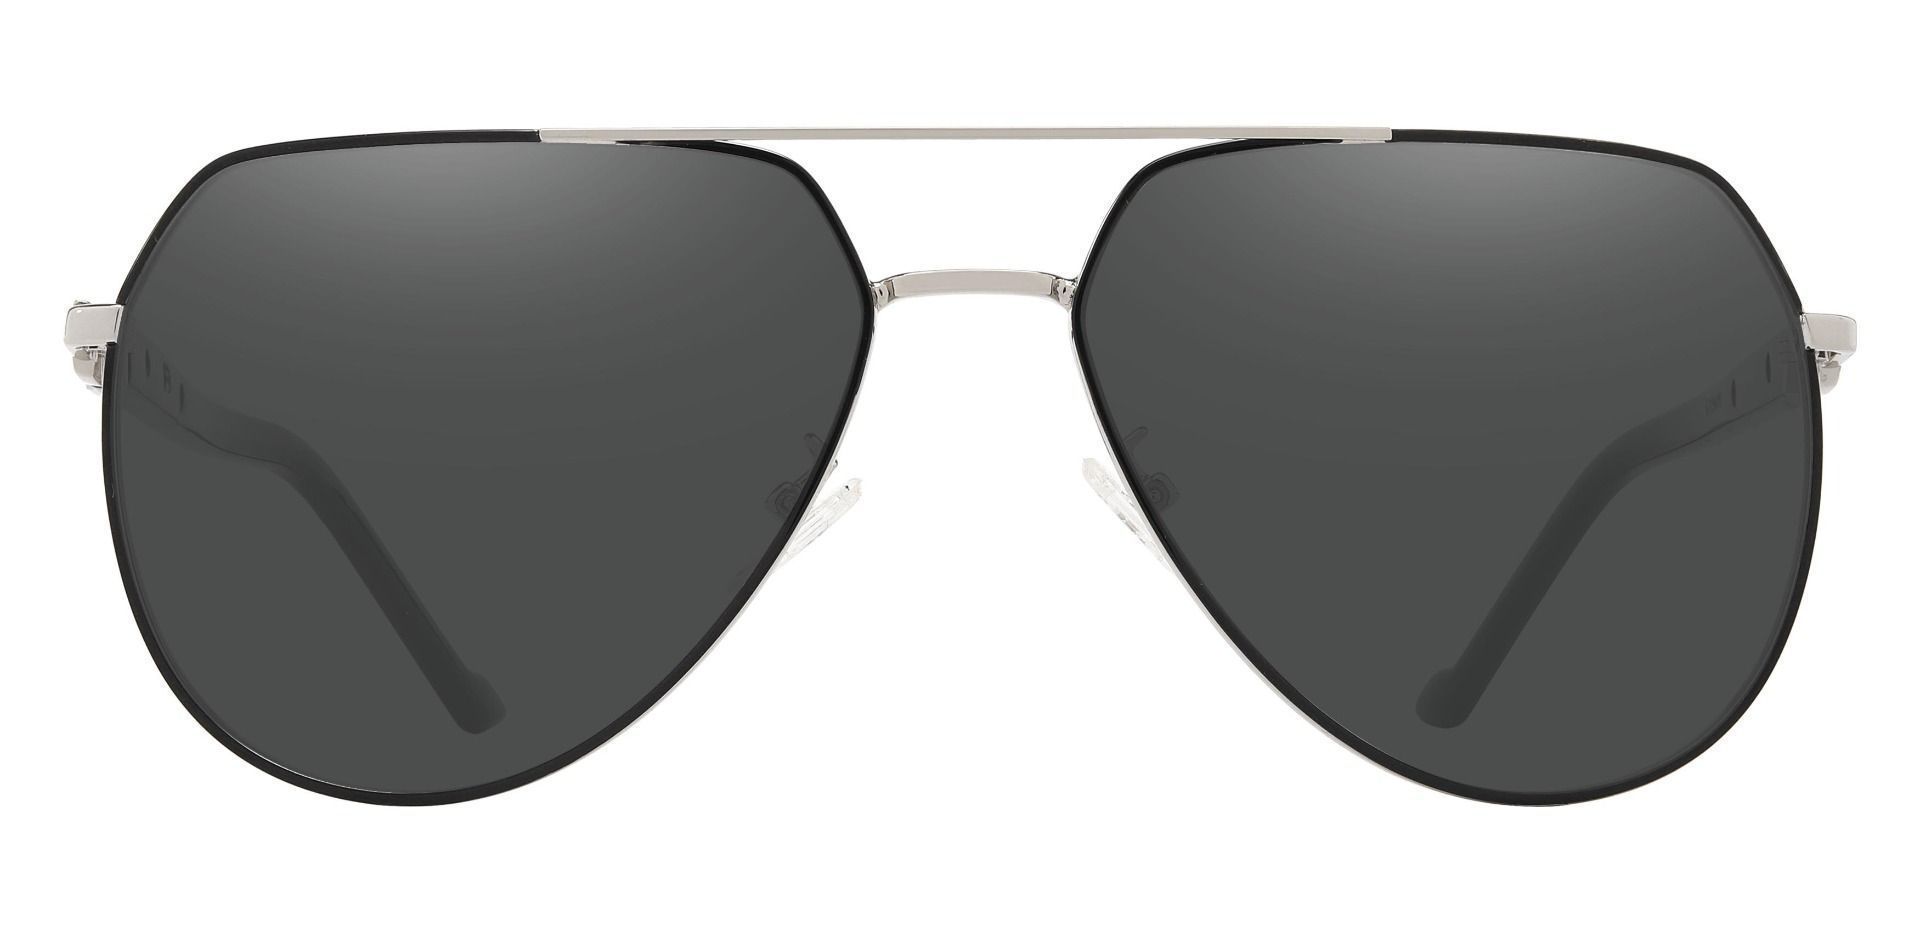 Wright Aviator Reading Sunglasses - Black Frame With Gray Lenses